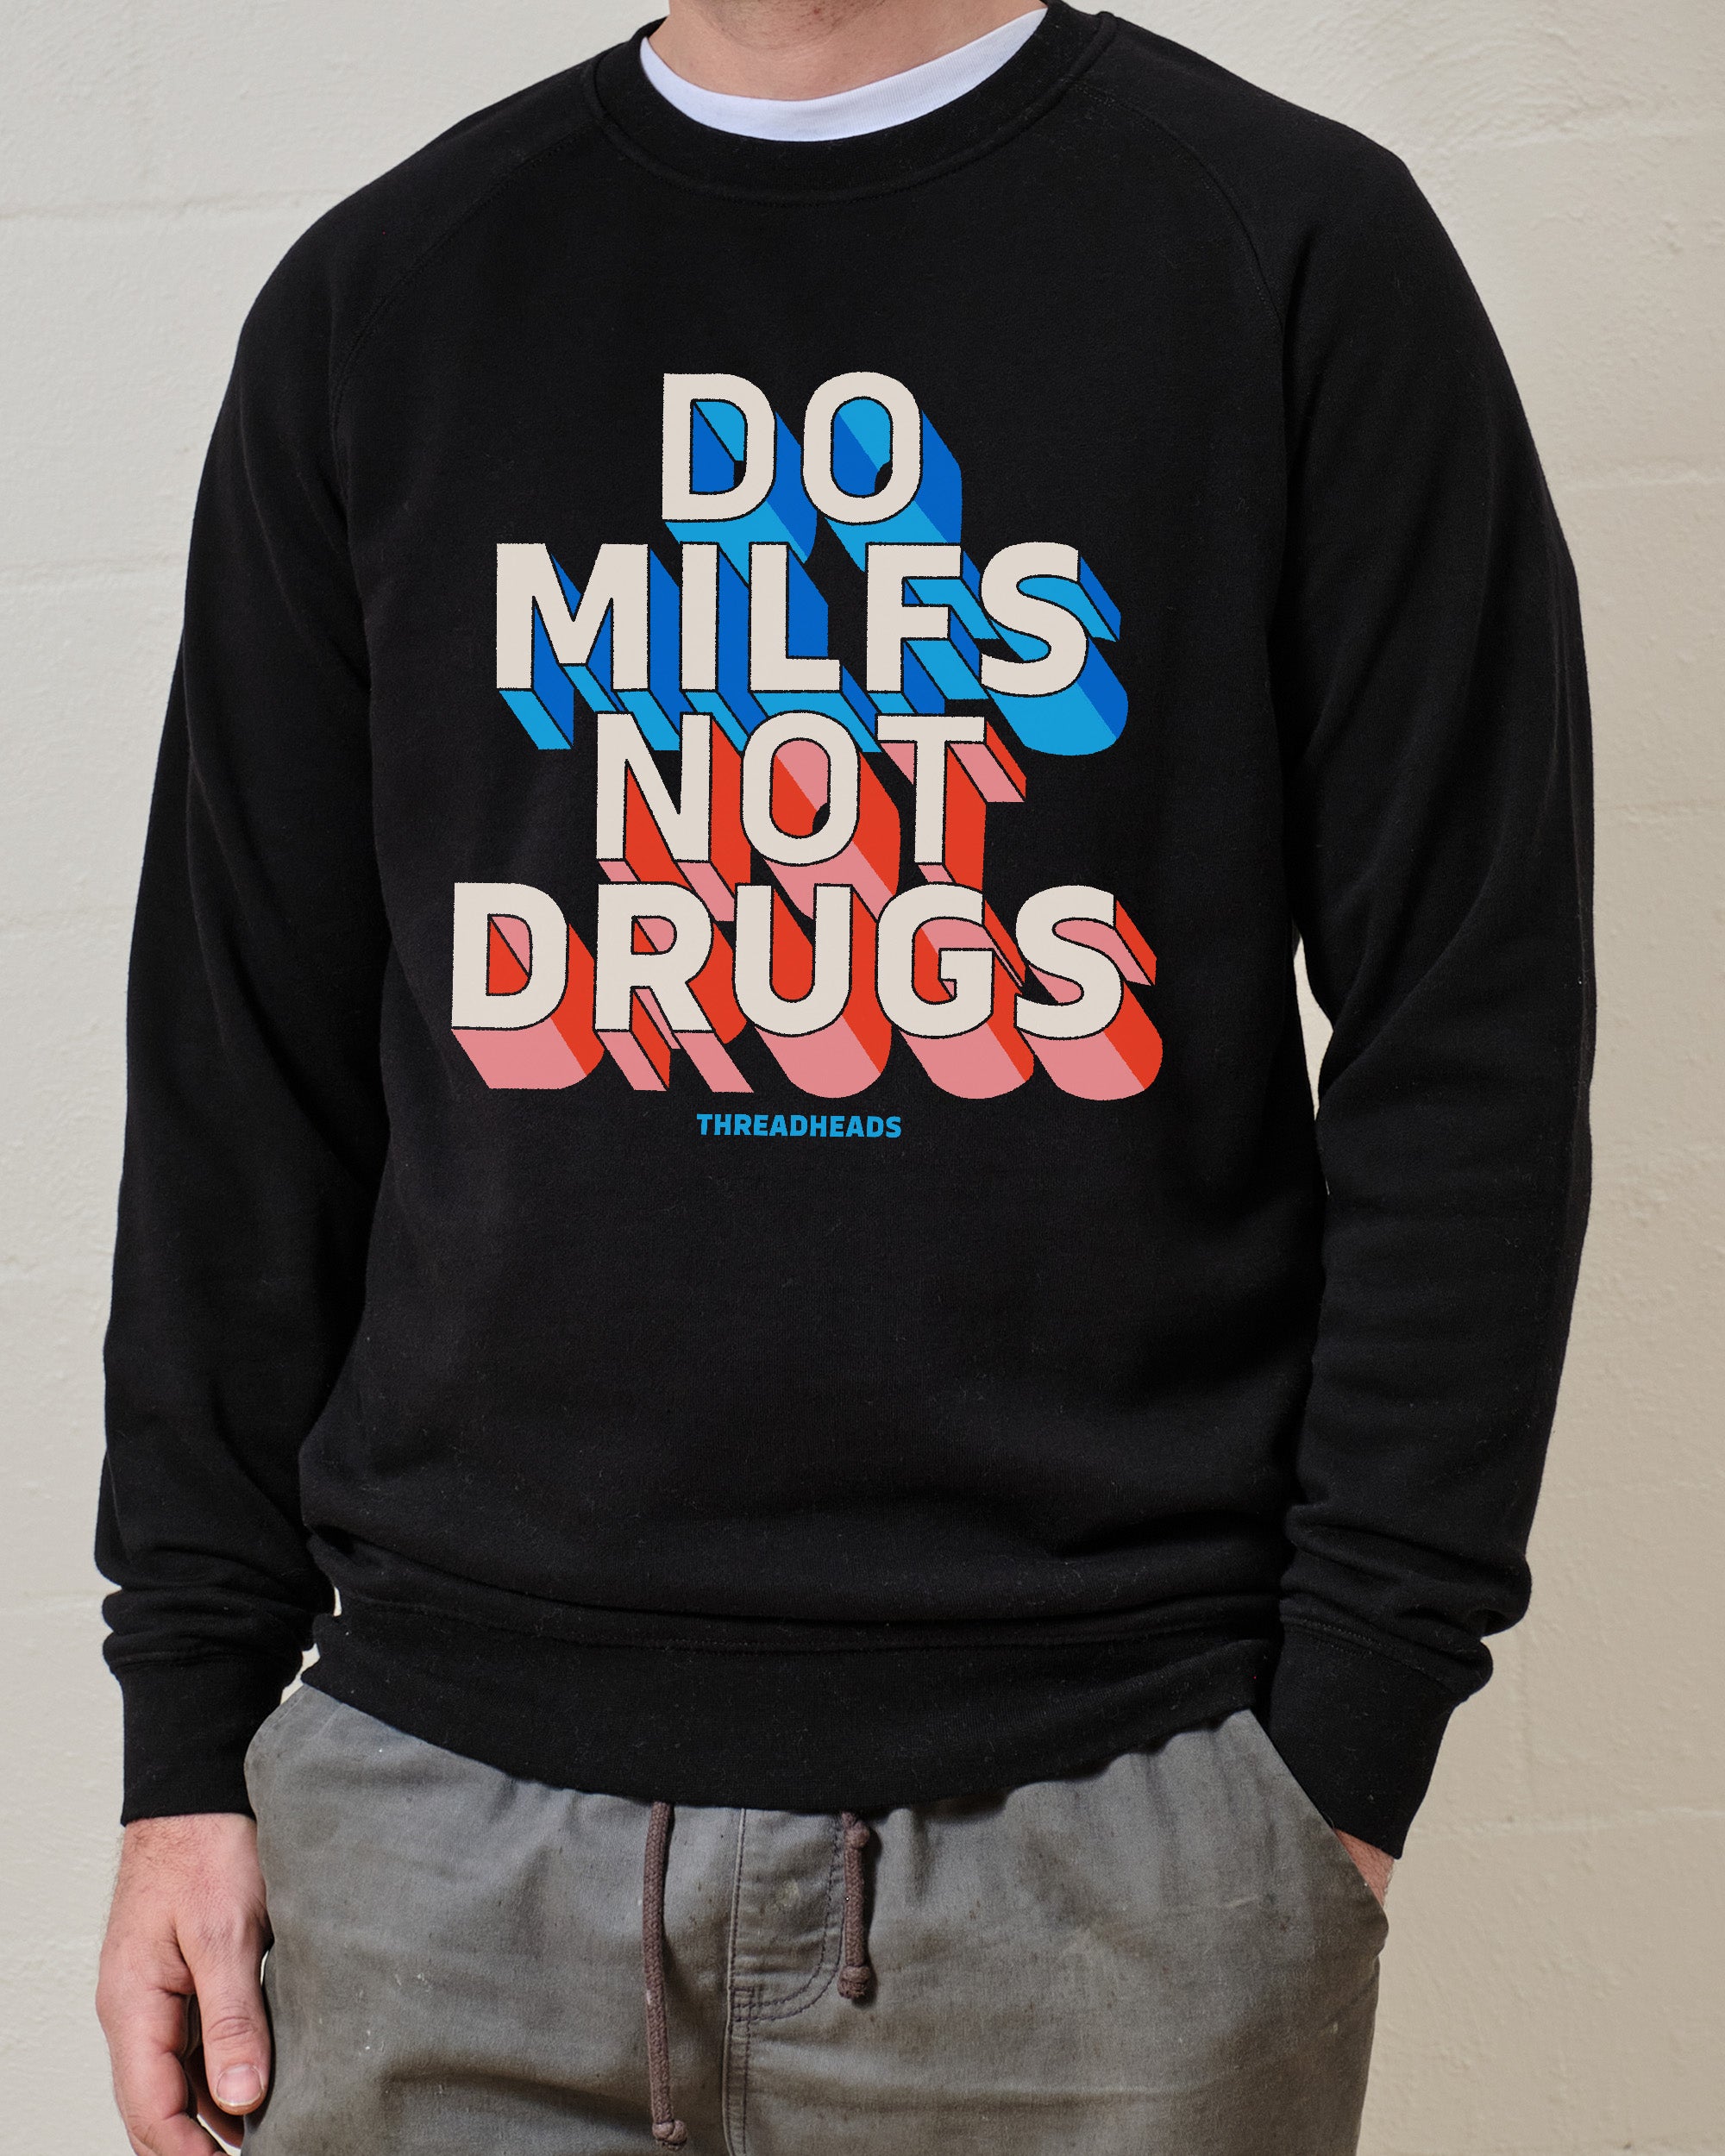 Do MILFs Not Drugs Jumper